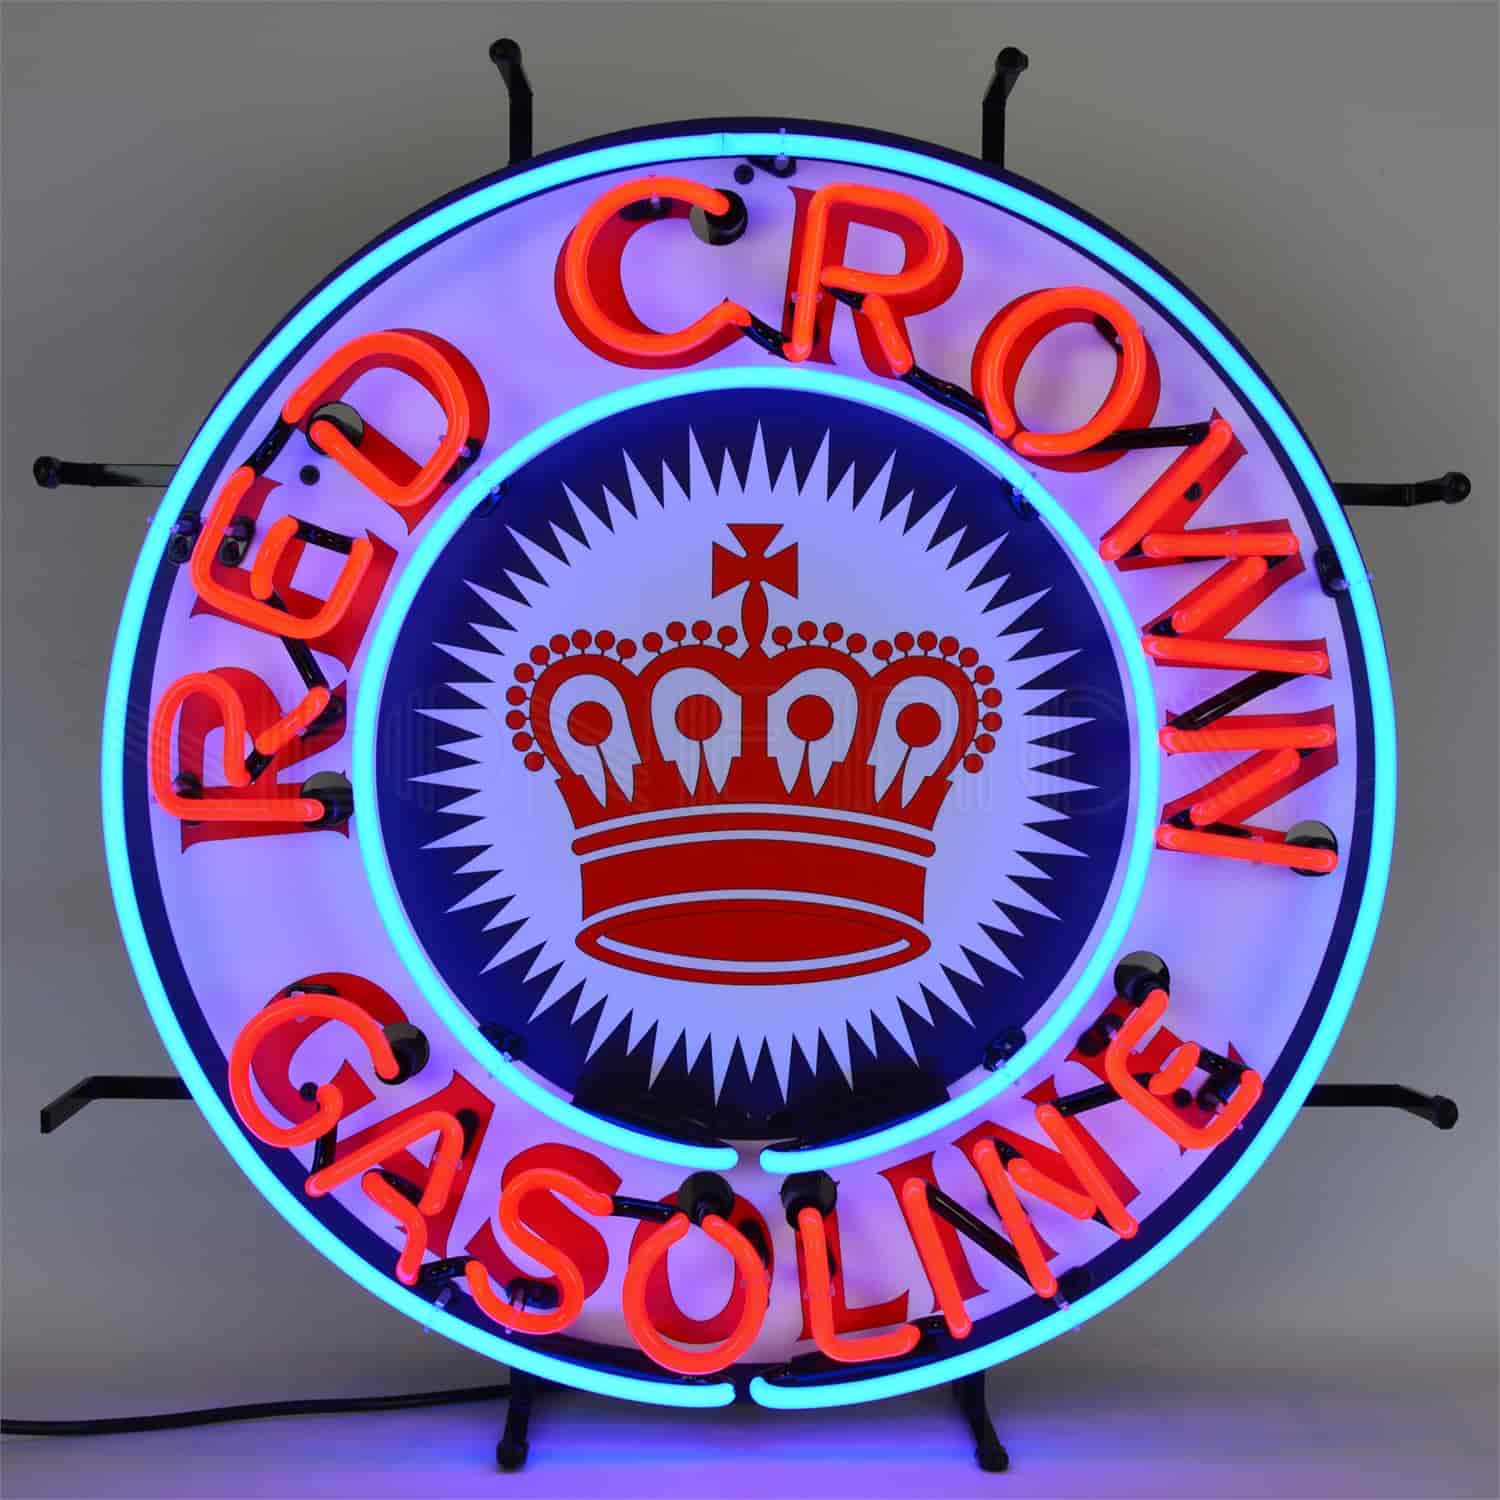 Red Crown Gasoline Neon Sign